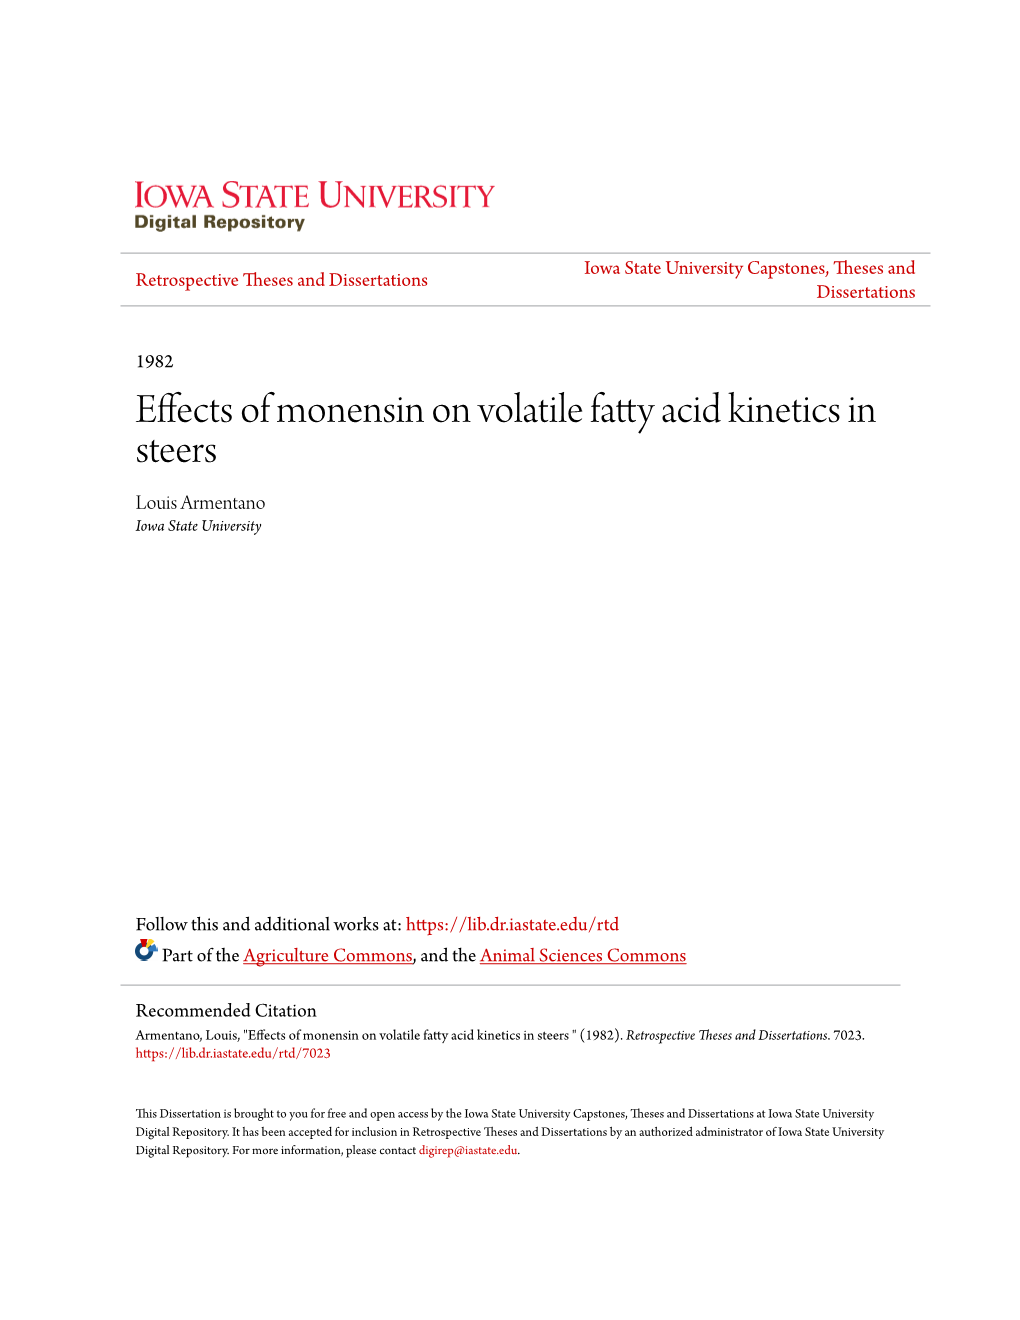 Effects of Monensin on Volatile Fatty Acid Kinetics in Steers Louis Armentano Iowa State University